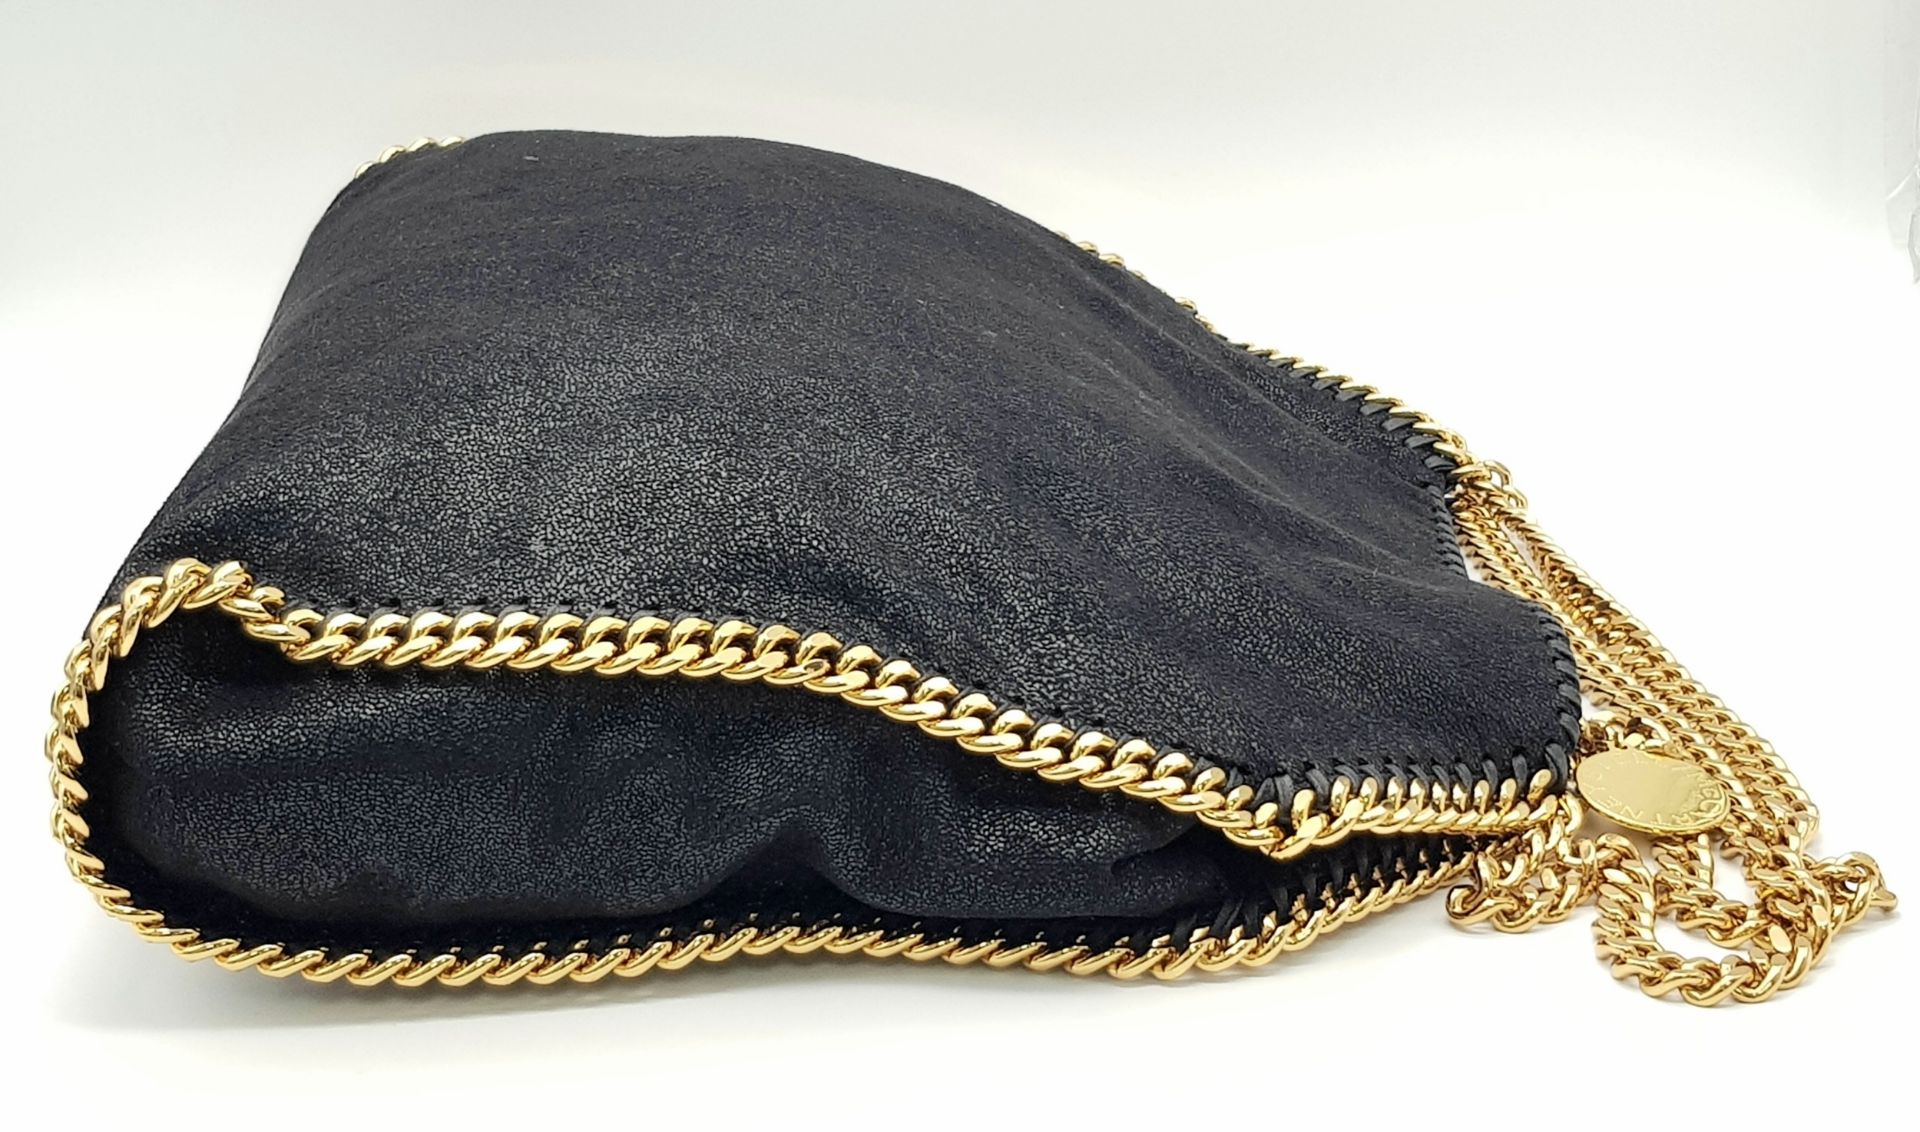 A Stella McCartney Black Falabella Shoulder/Tote Bag. Faux suede exterior with gold-toned heavy - Bild 5 aus 11